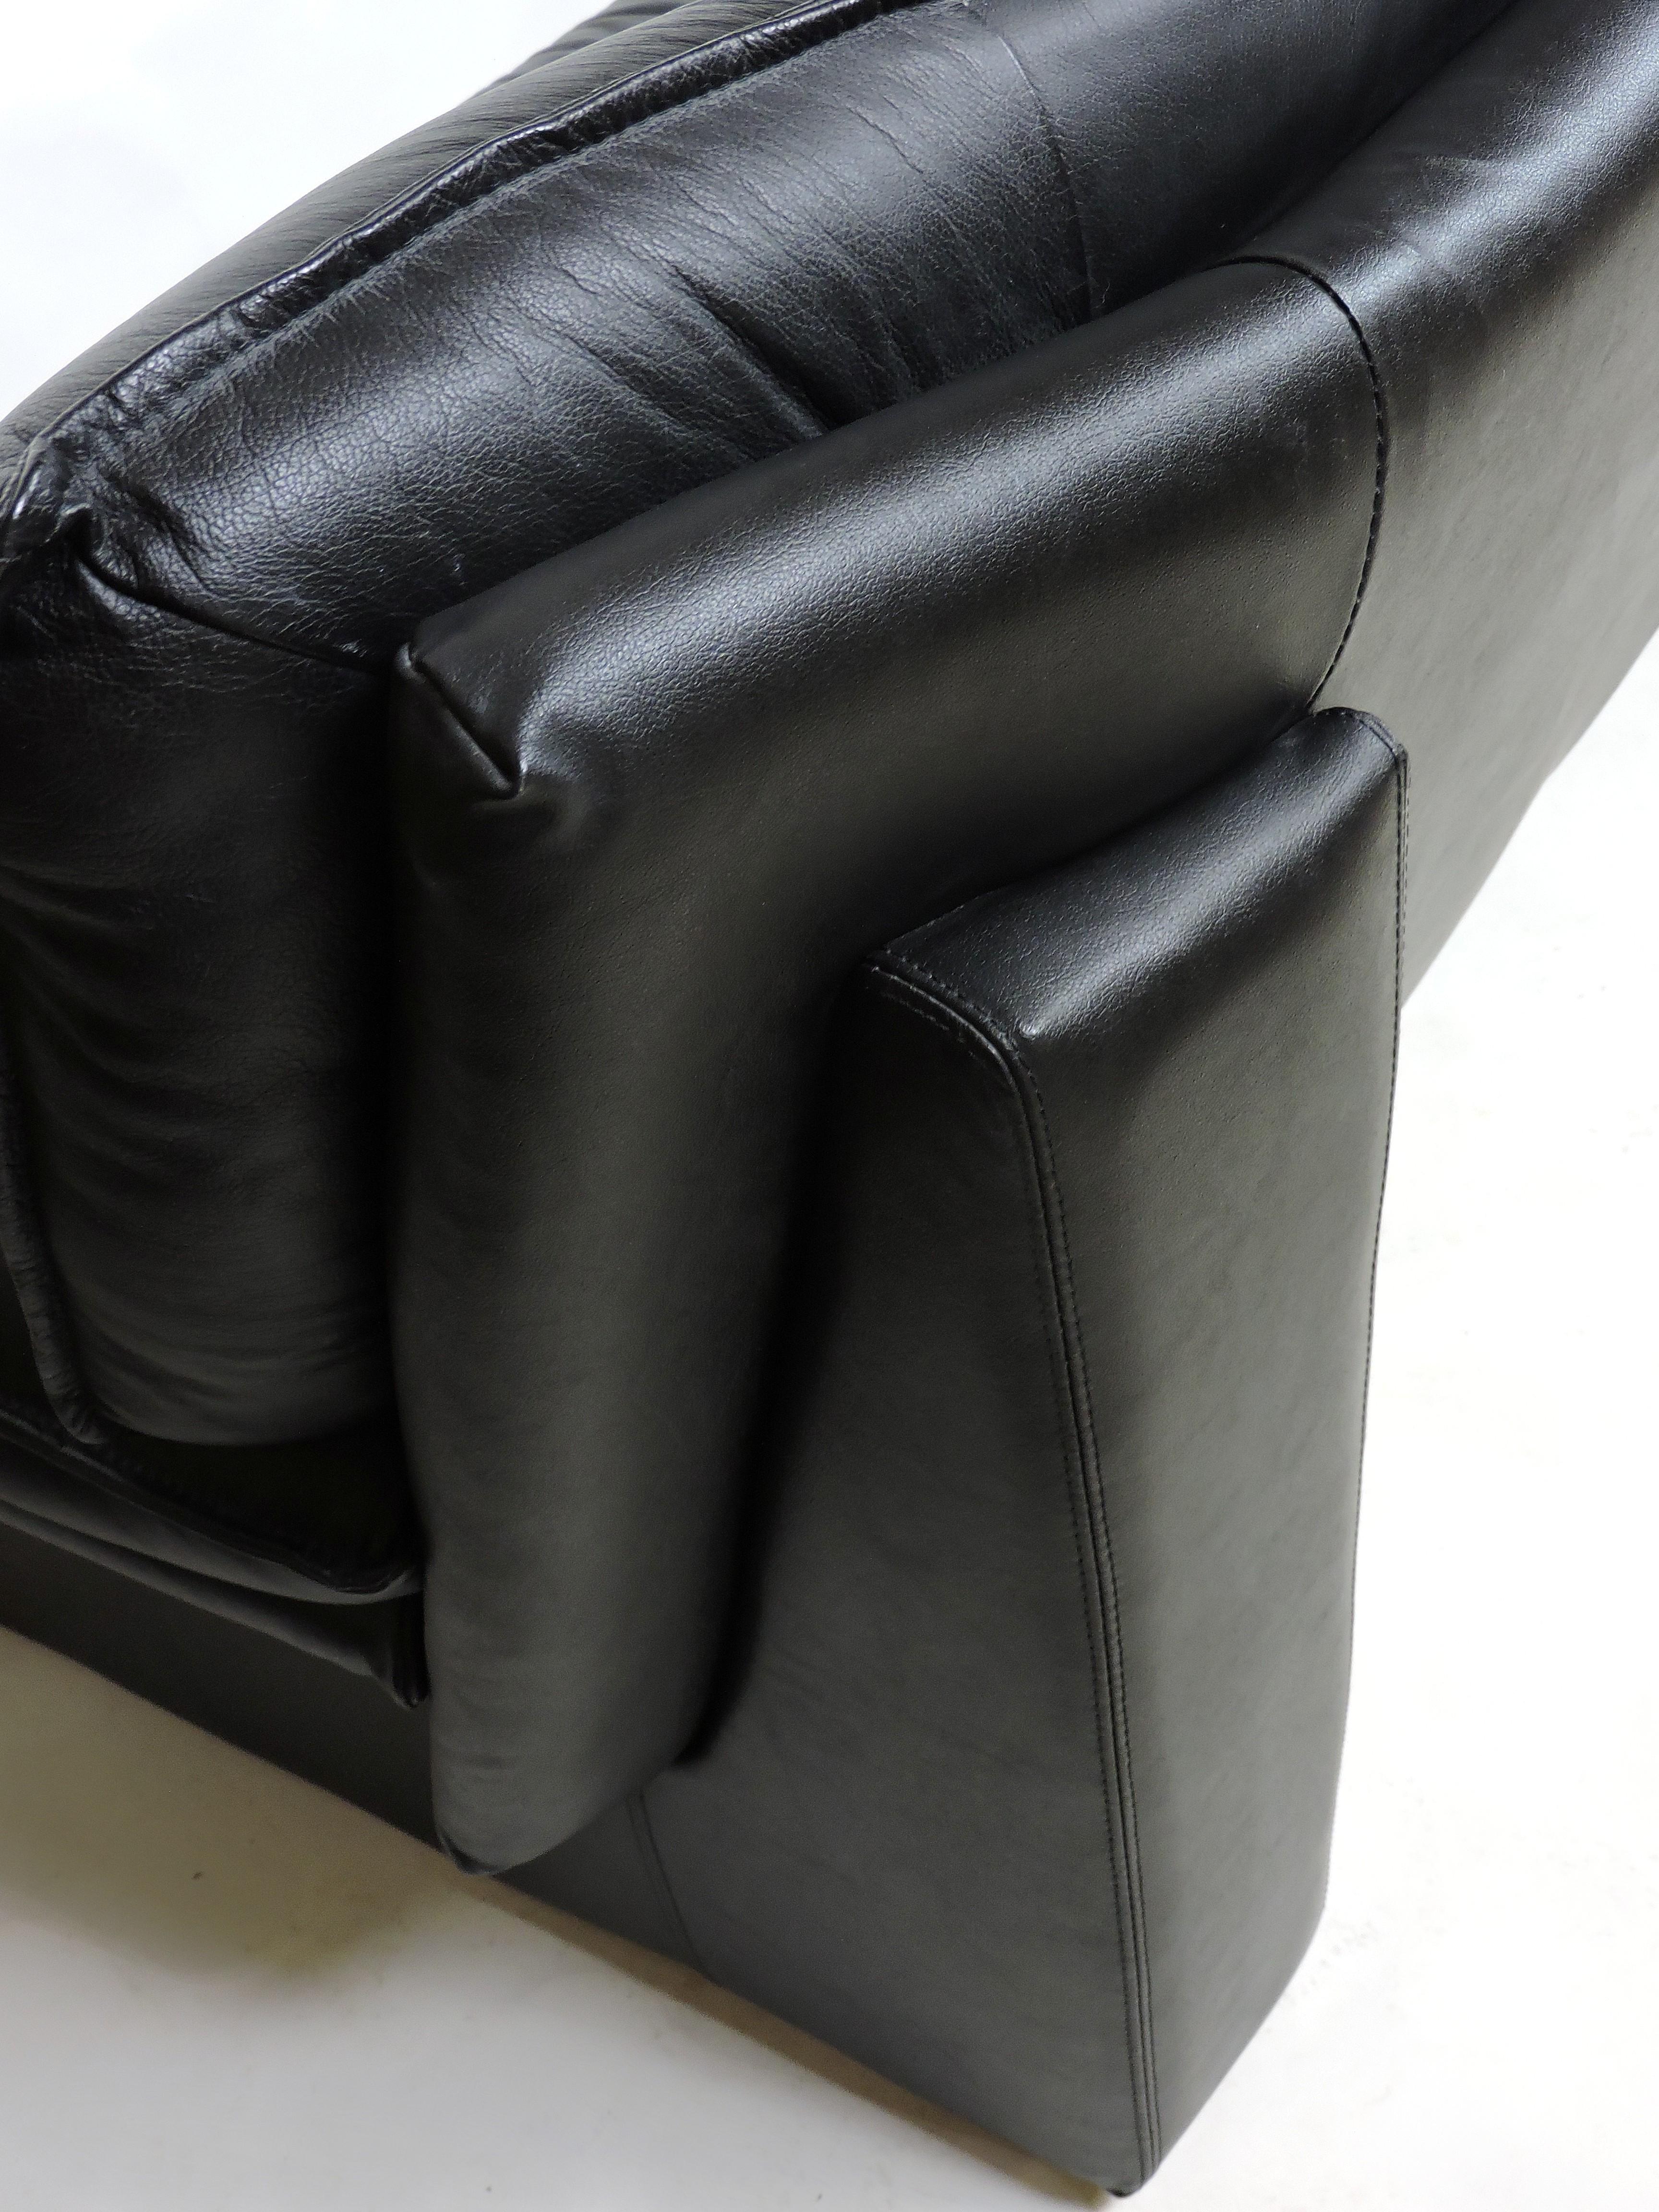 Nicoletti Salotti Italian Post Modern Black Leather Sofa 3